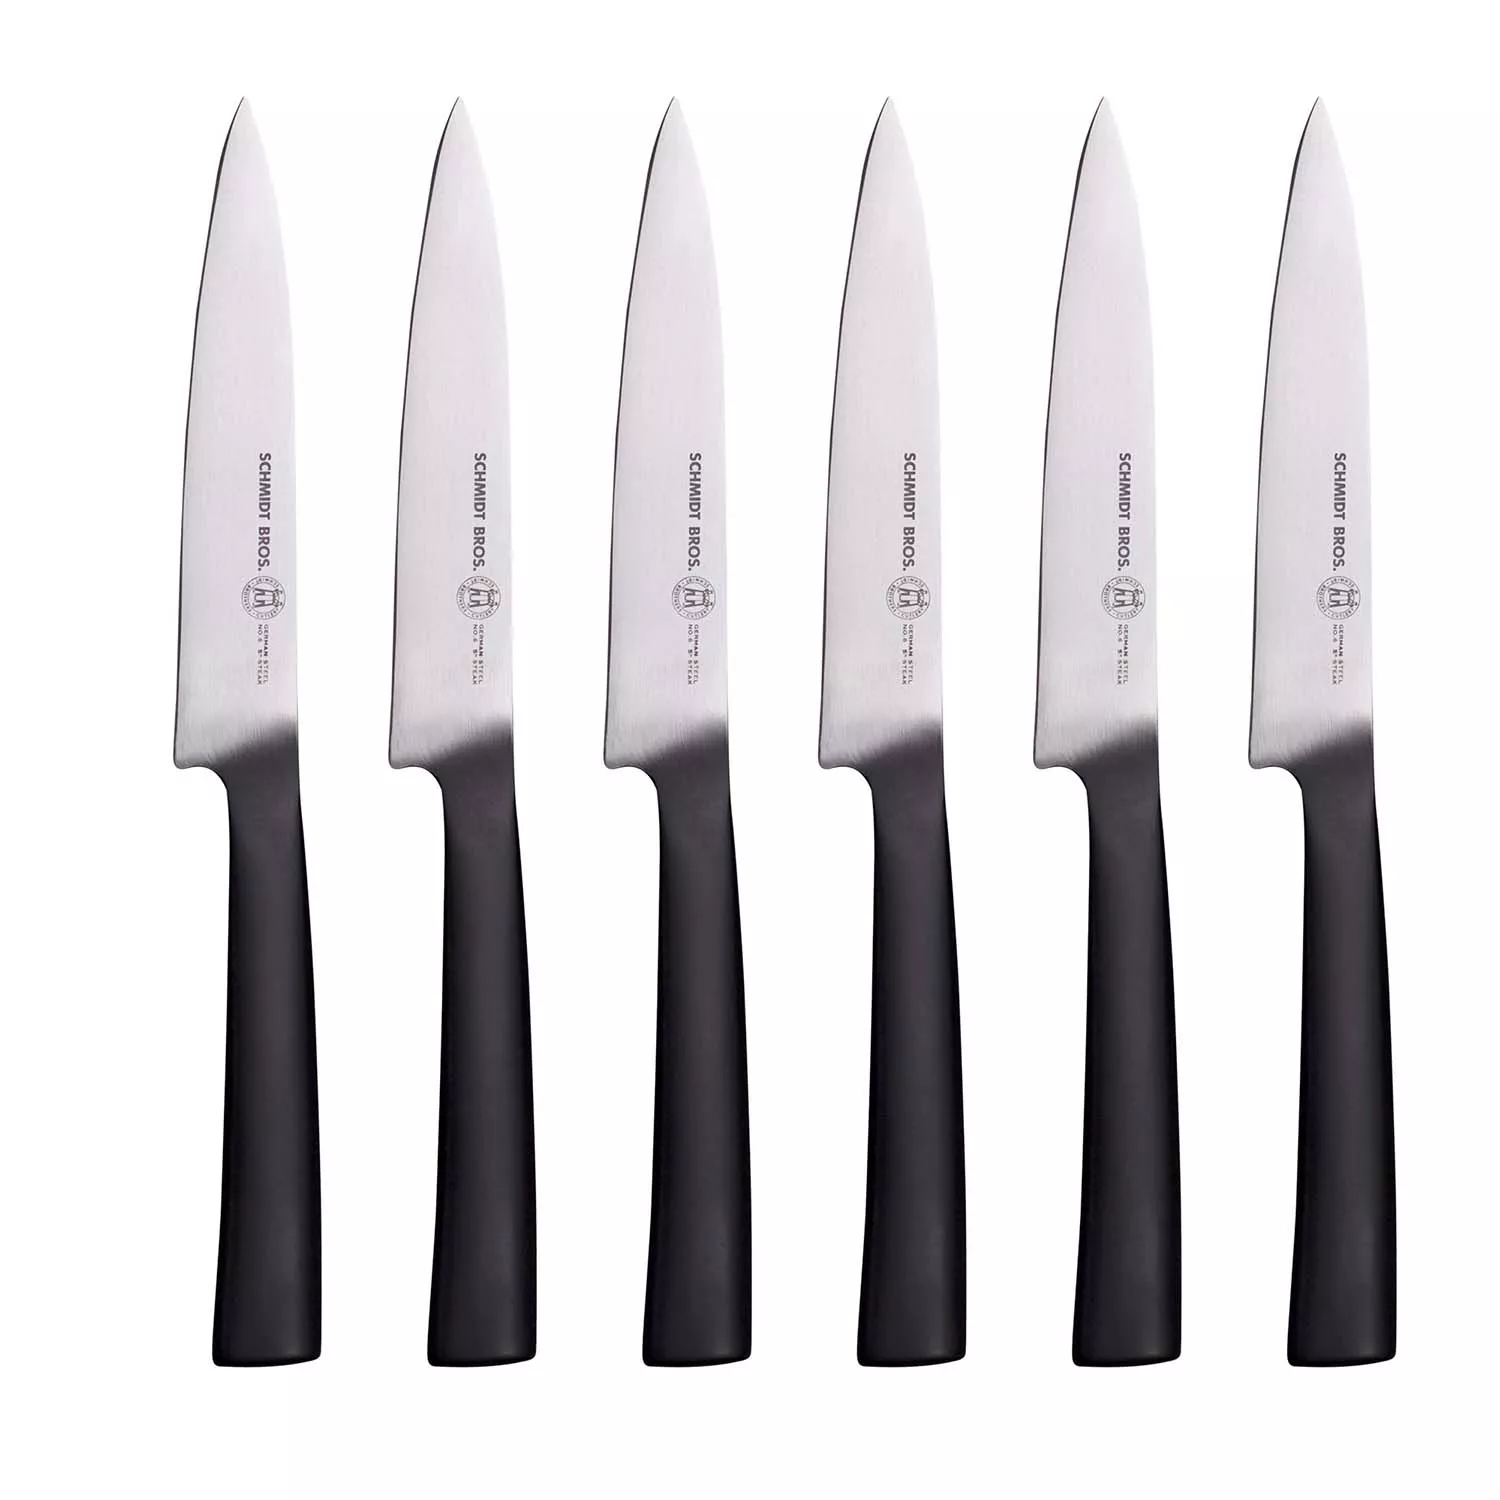 Schmidt Brothers Cutlery Titan 22 Series 12 Piece Knife Block Set